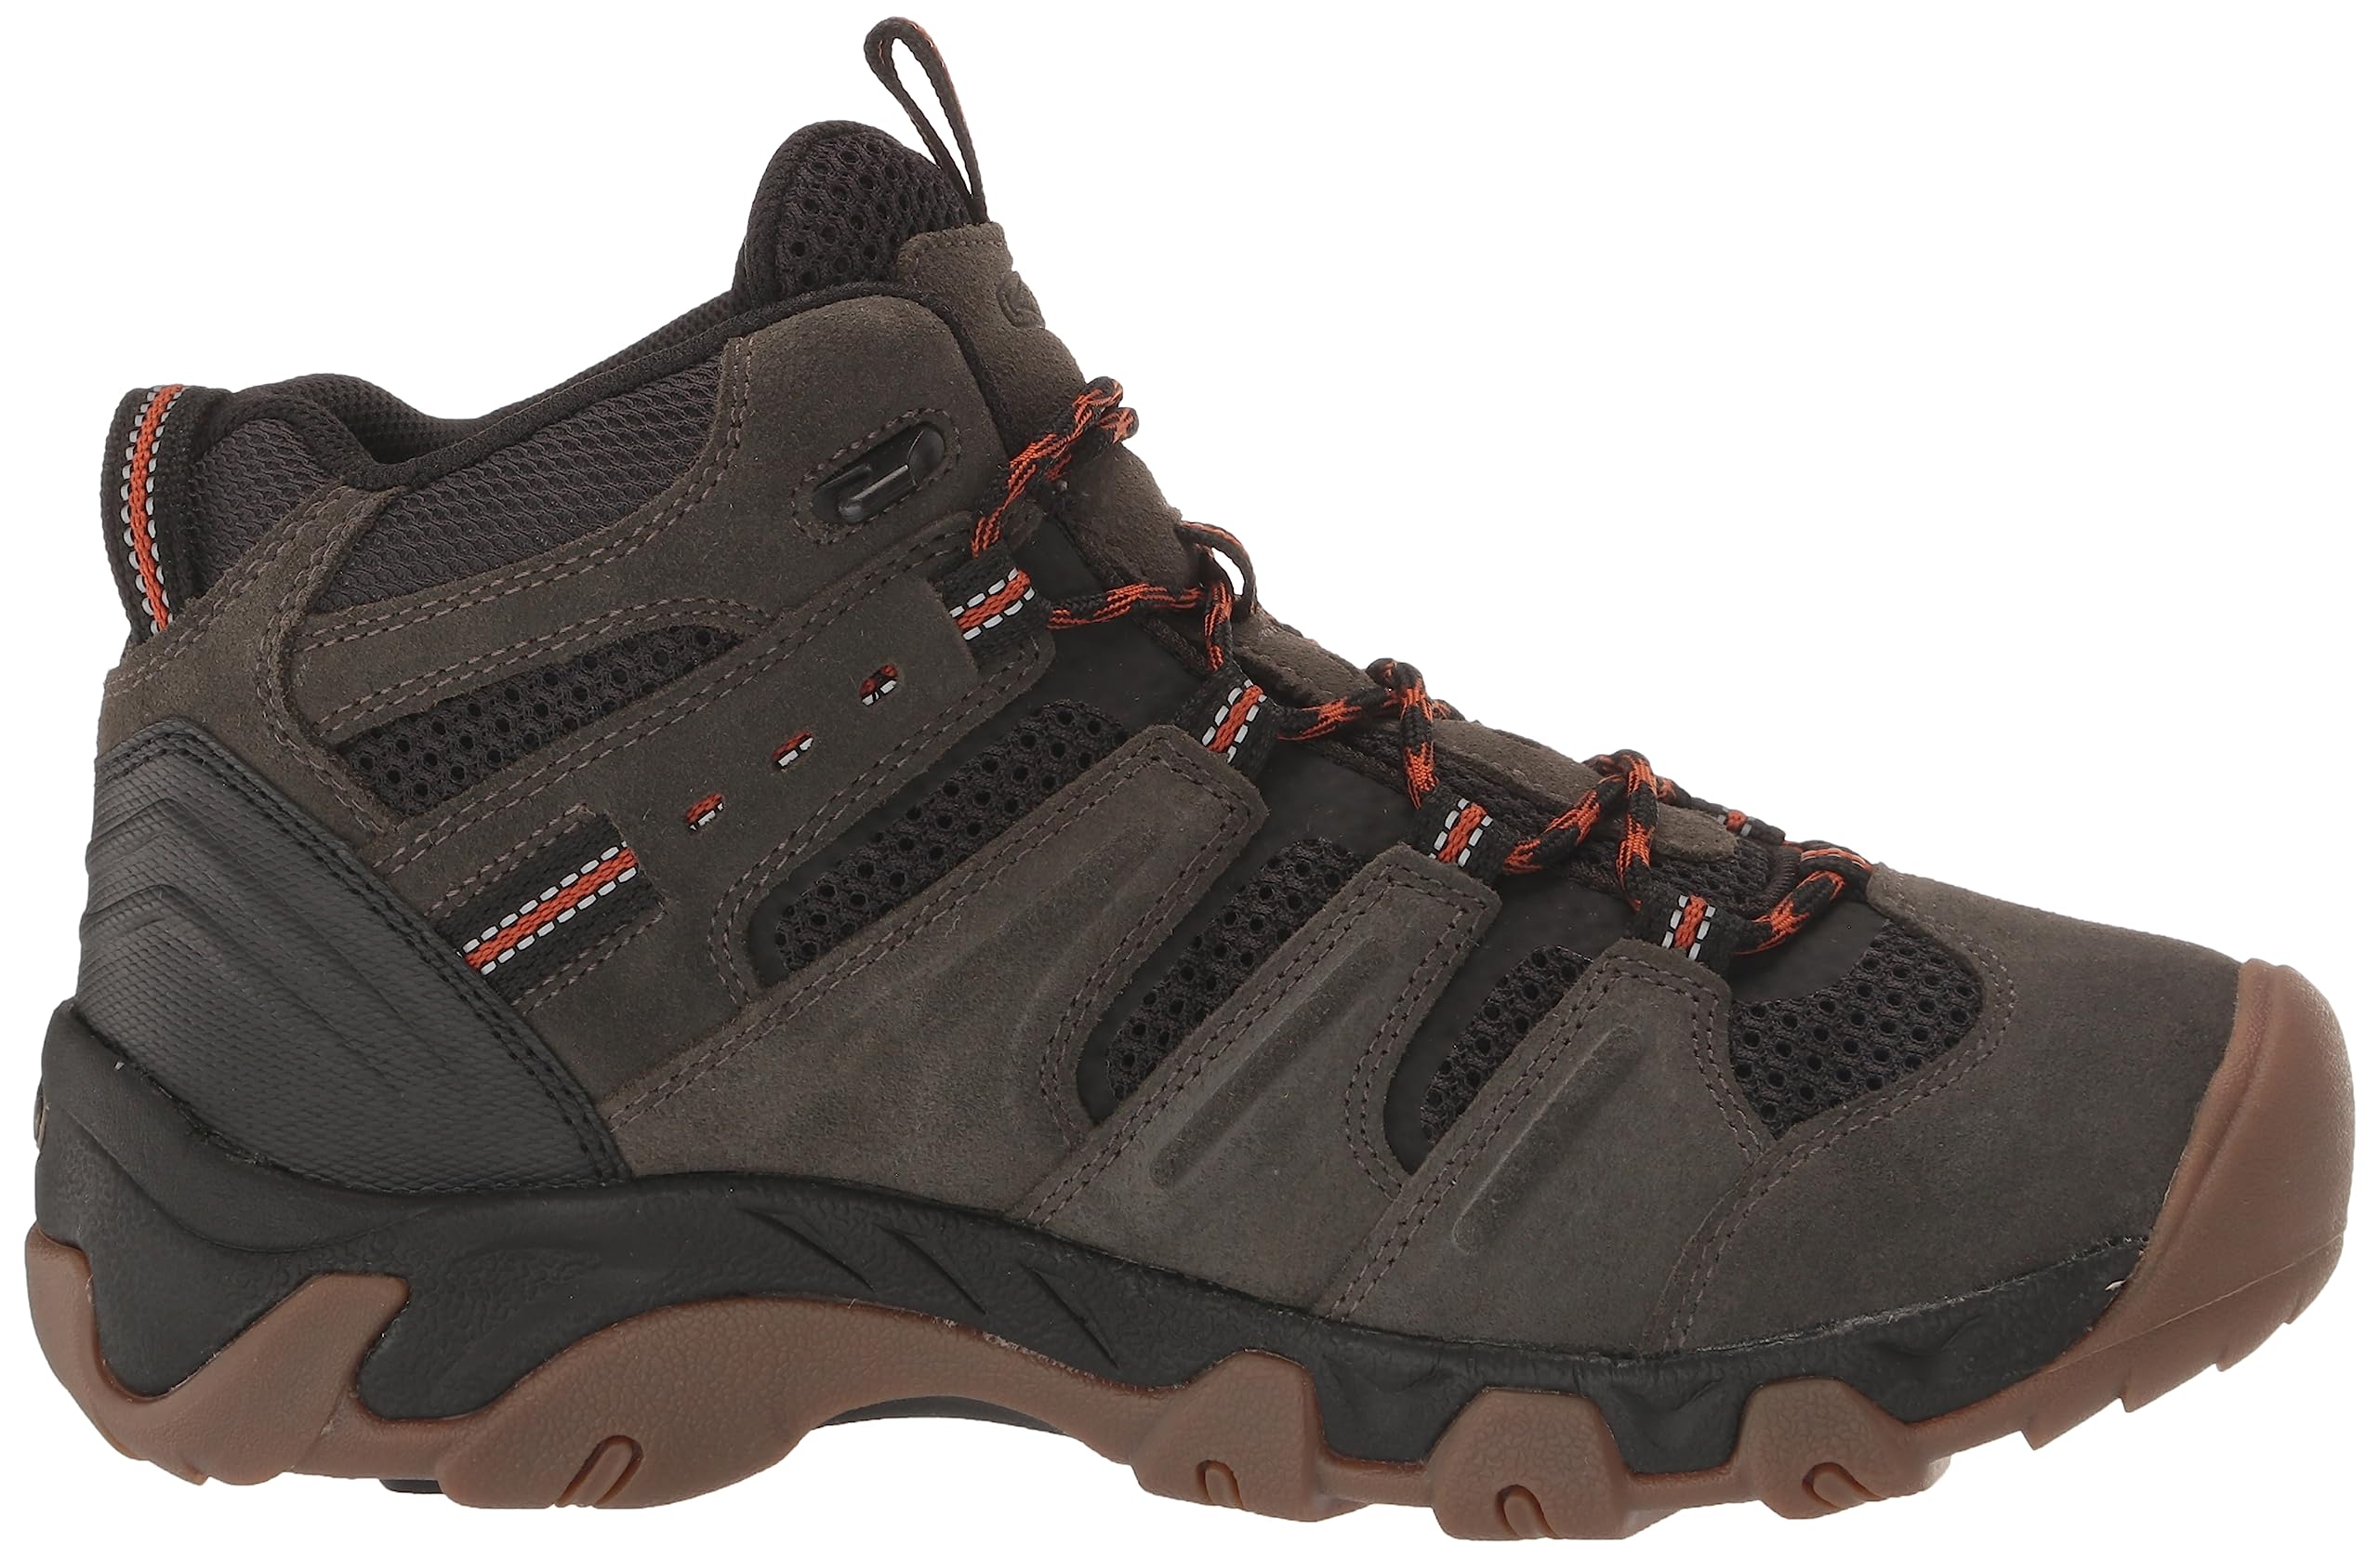 KEEN Men's Headout Mid Height Waterproof All Terrain Hiking Boots